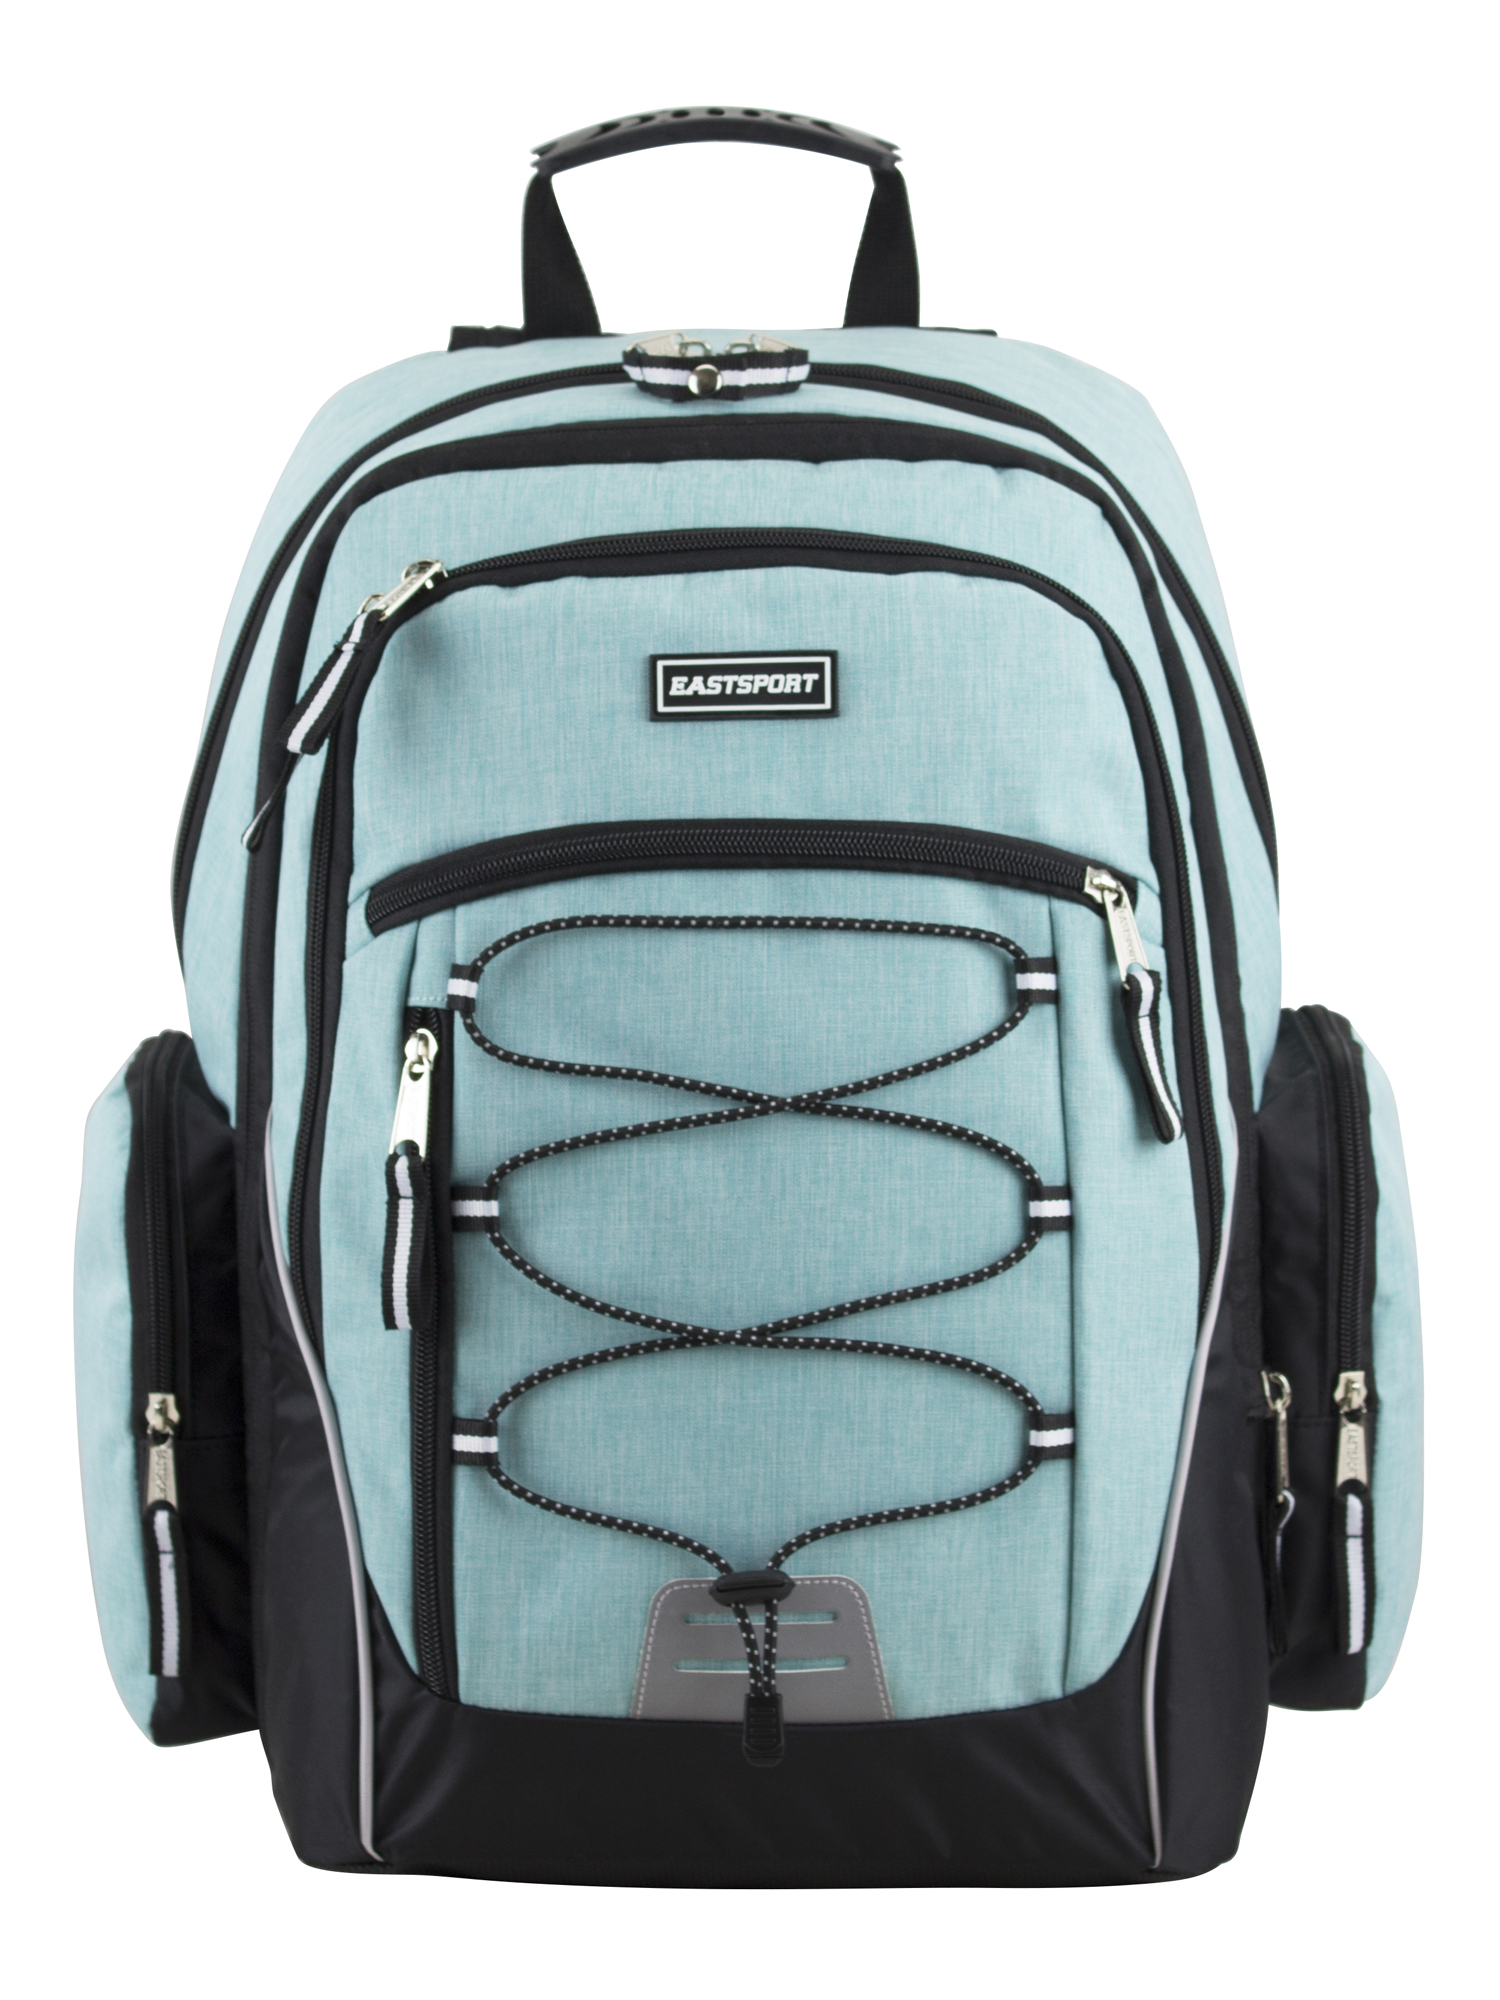 Eastsport Unisex Optimus Backpack, Mint - image 4 of 8